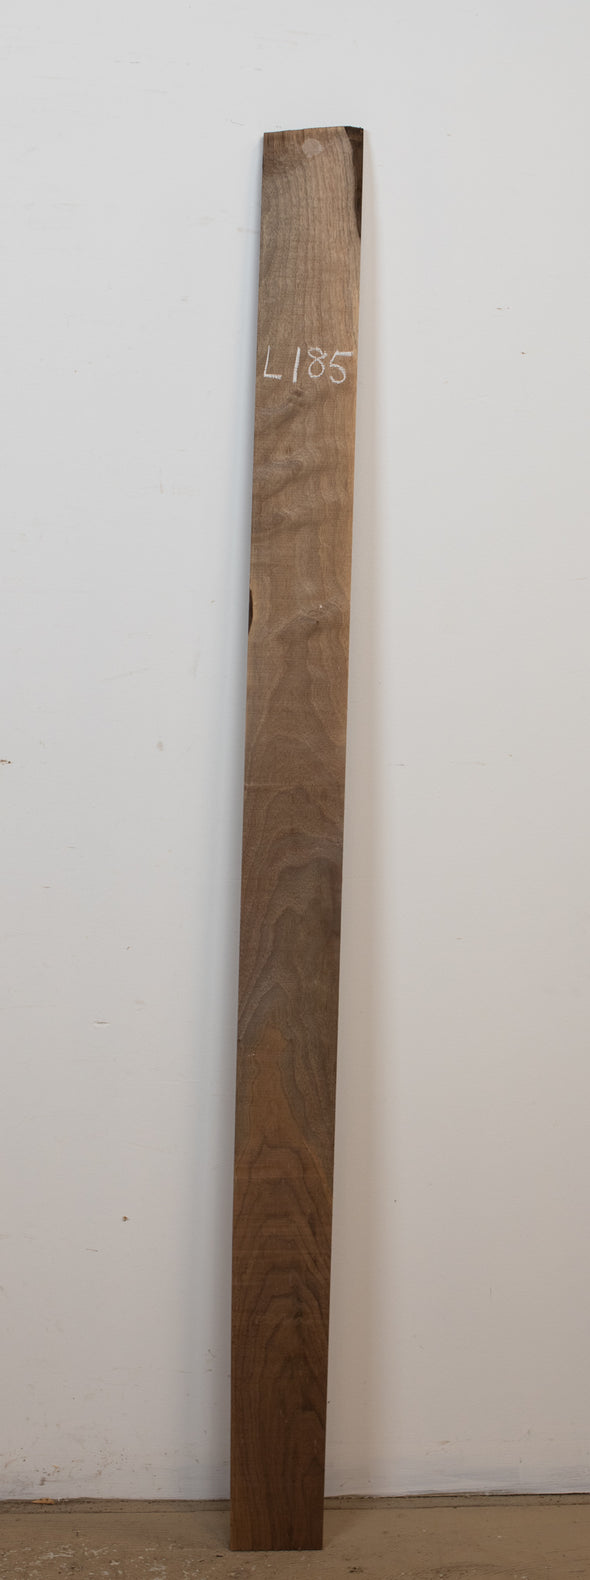 Lumber - L185